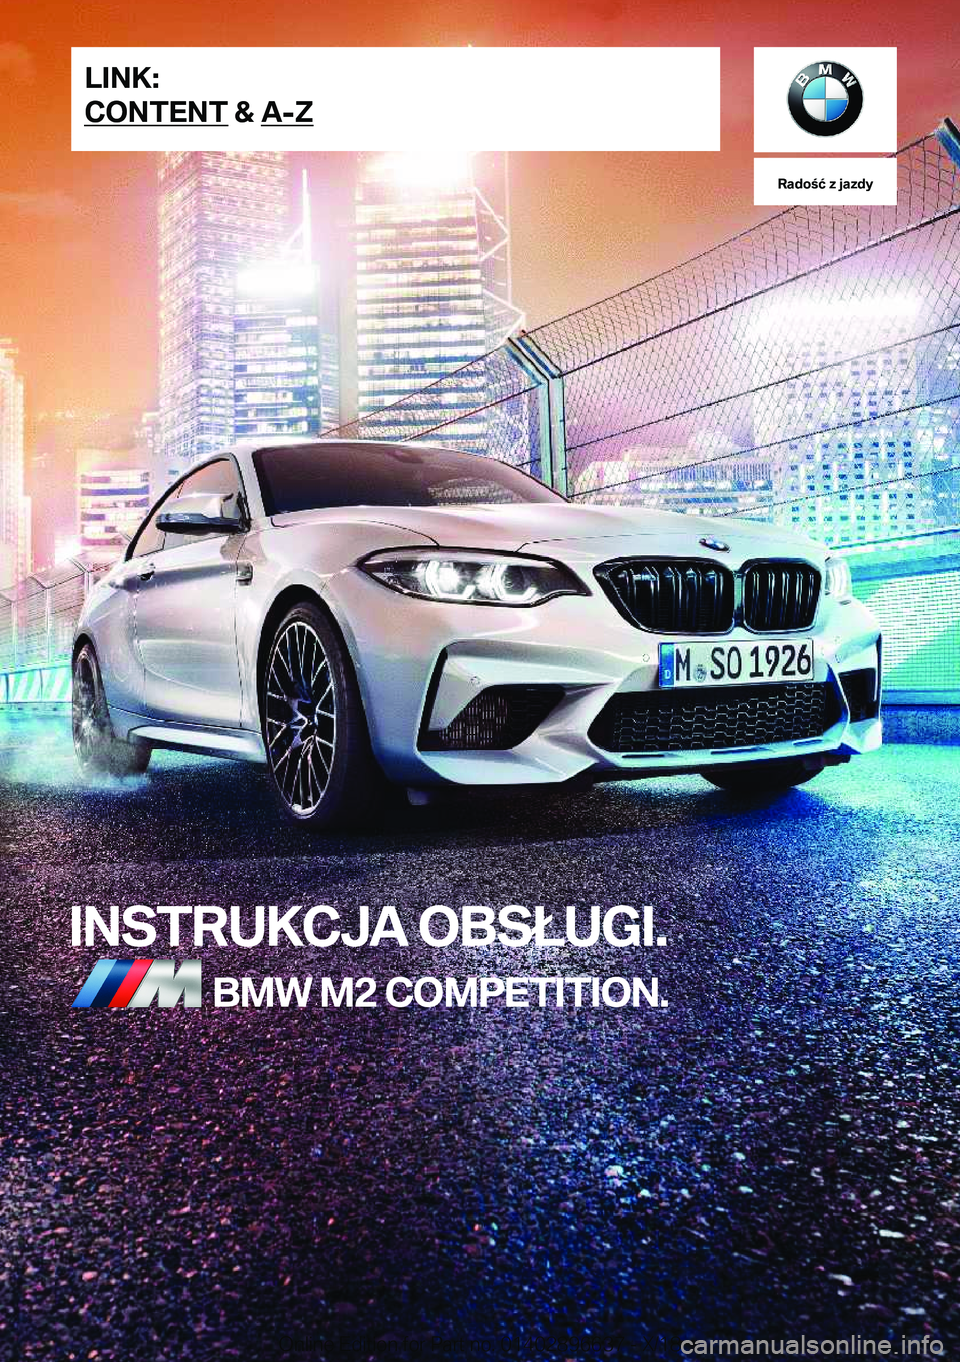 BMW M2 2019  Instrukcja obsługi (in Polish) �R�a�d�o�ć��z��j�a�z�d�y
�I�N�S�T�R�U�K�C�J�A��O�B�S�Ł�U�G�I�.�B�M�W��M�2��C�O�M�P�E�T�I�T�I�O�N�.�L�I�N�K�:
�C�O�N�T�E�N�T��&��A�-�Z�O�n�l�i�n�e��E�d�i�t�i�o�n��f�o�r��P�a�r�t��n�o�.�